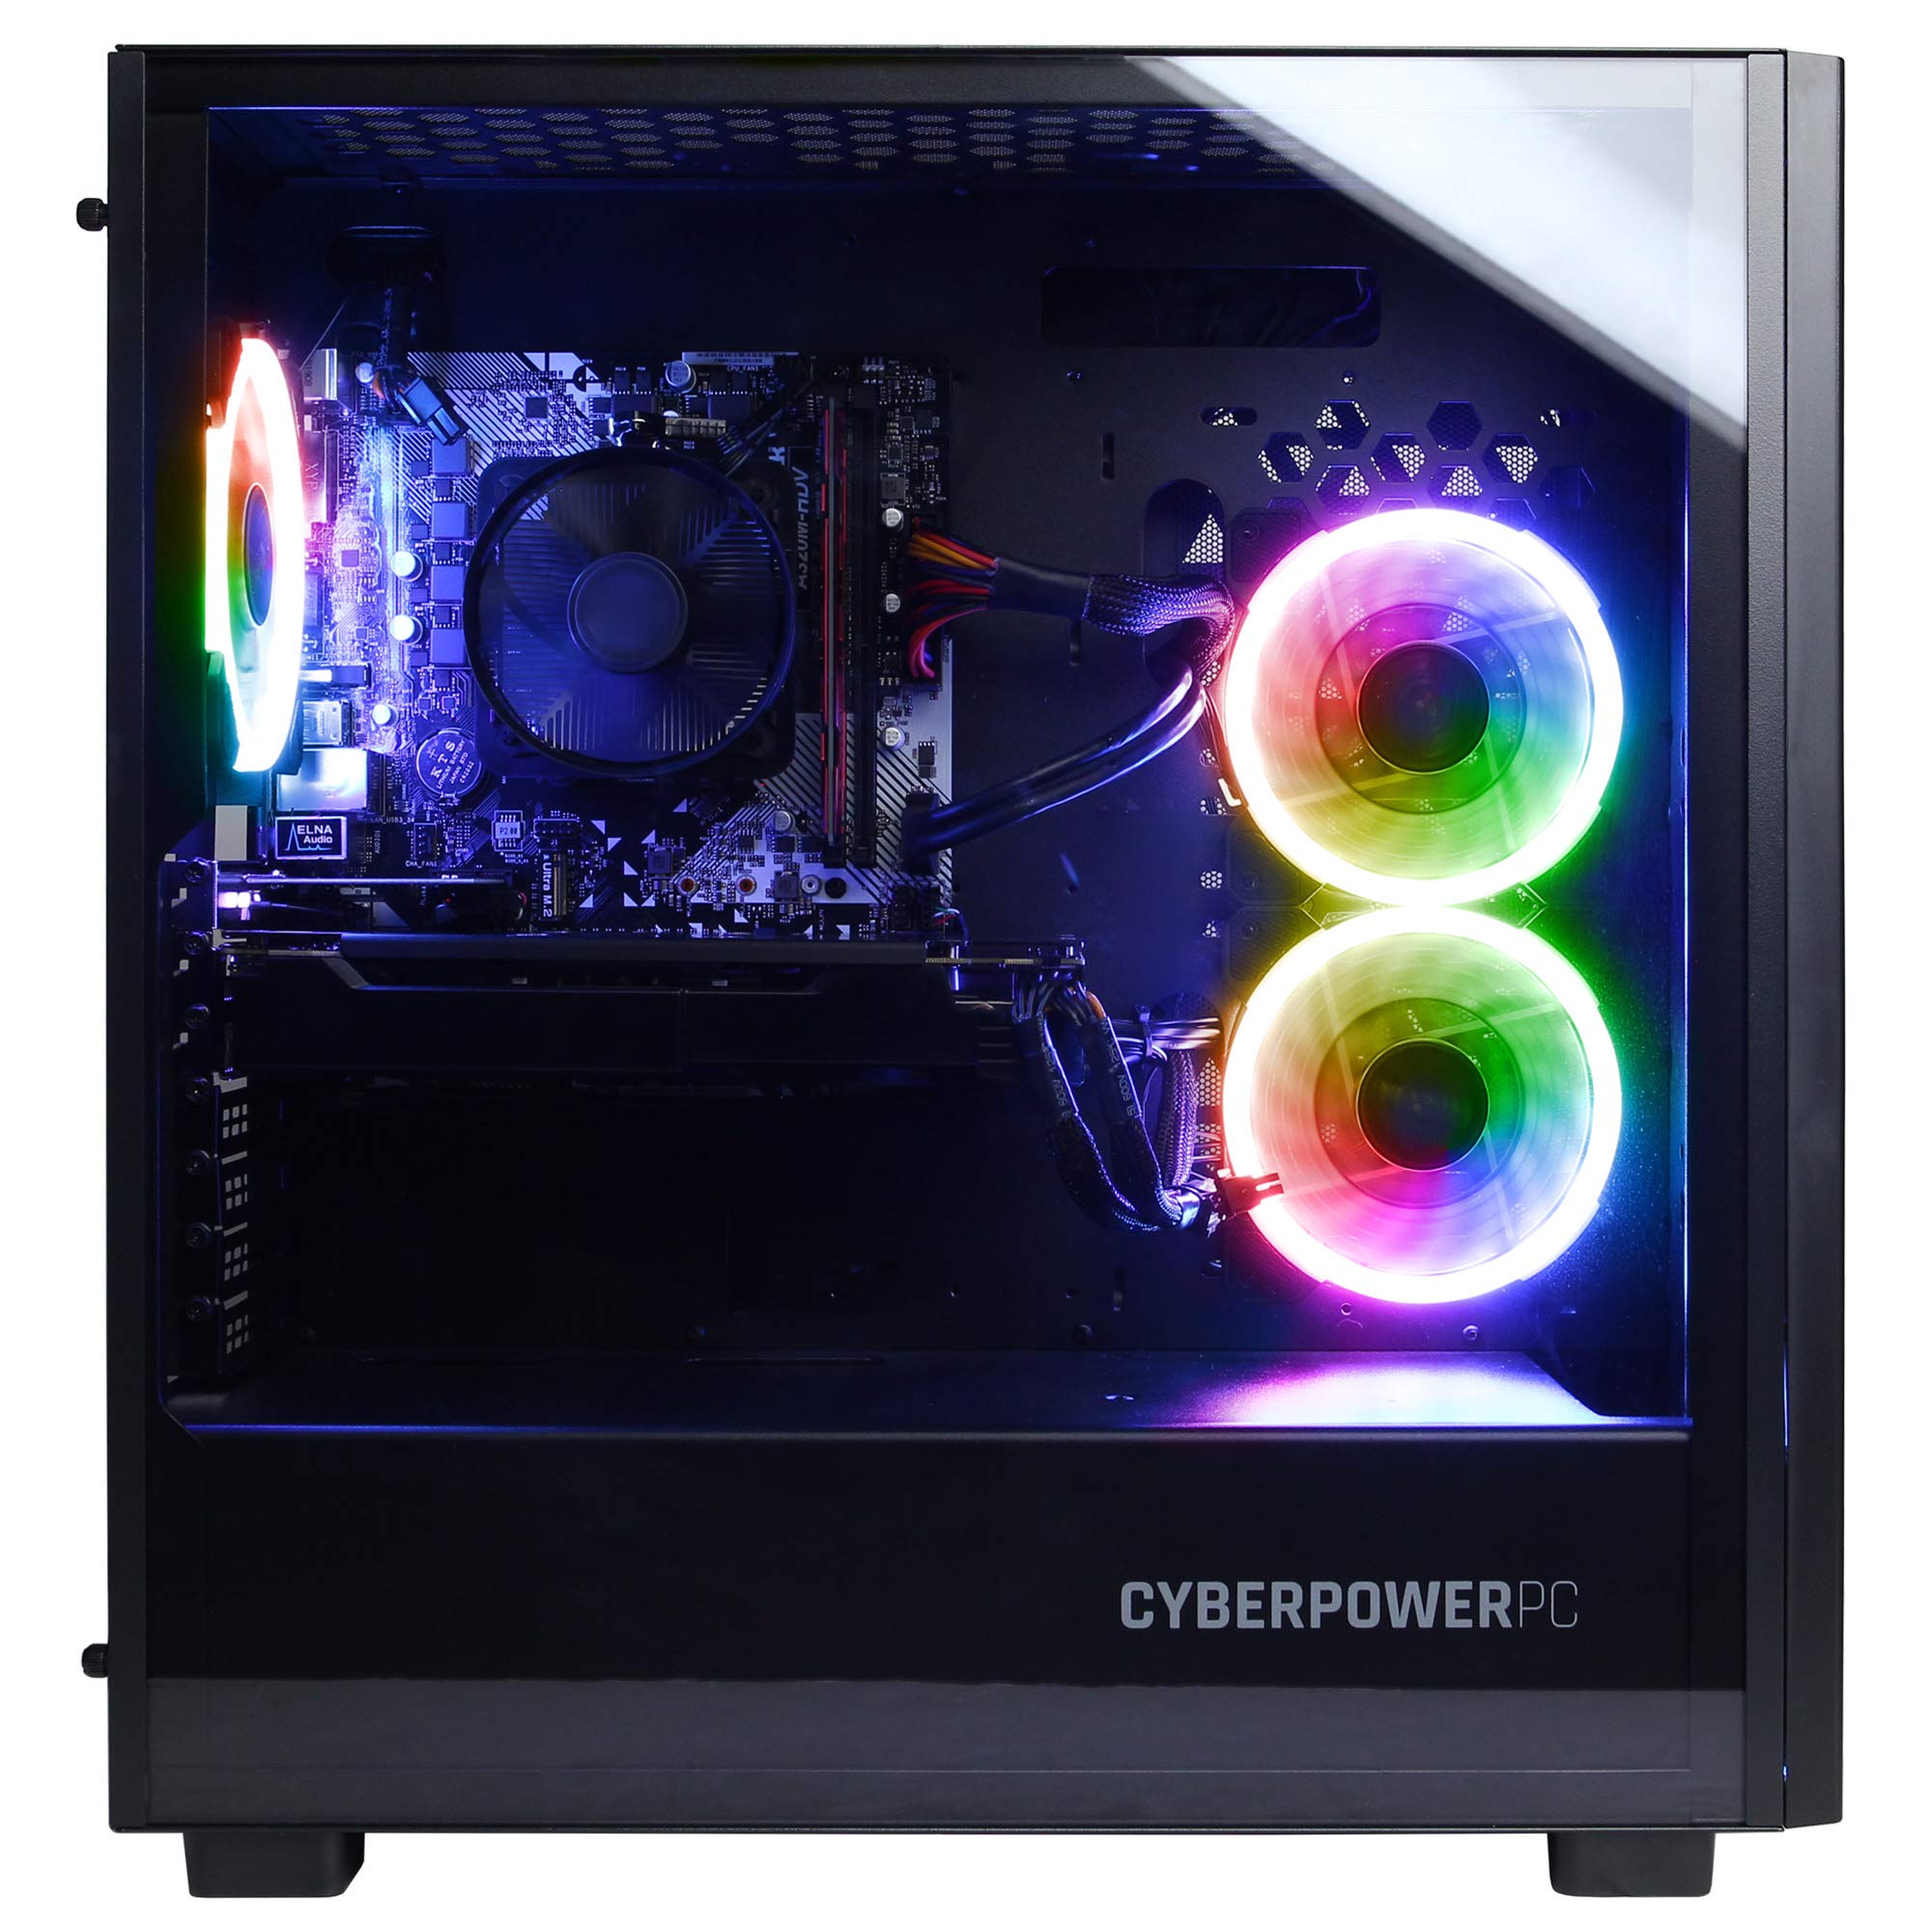 CyberpowerPC Gamer Master PC, AMD Ryzen 3 3100 3.6GHz, 8GB DDR4, AMD Radeon RX 550 2GB, 500GB PCI-E NVMe SSD, WiFi & Win 10 Home (GMA600V4)